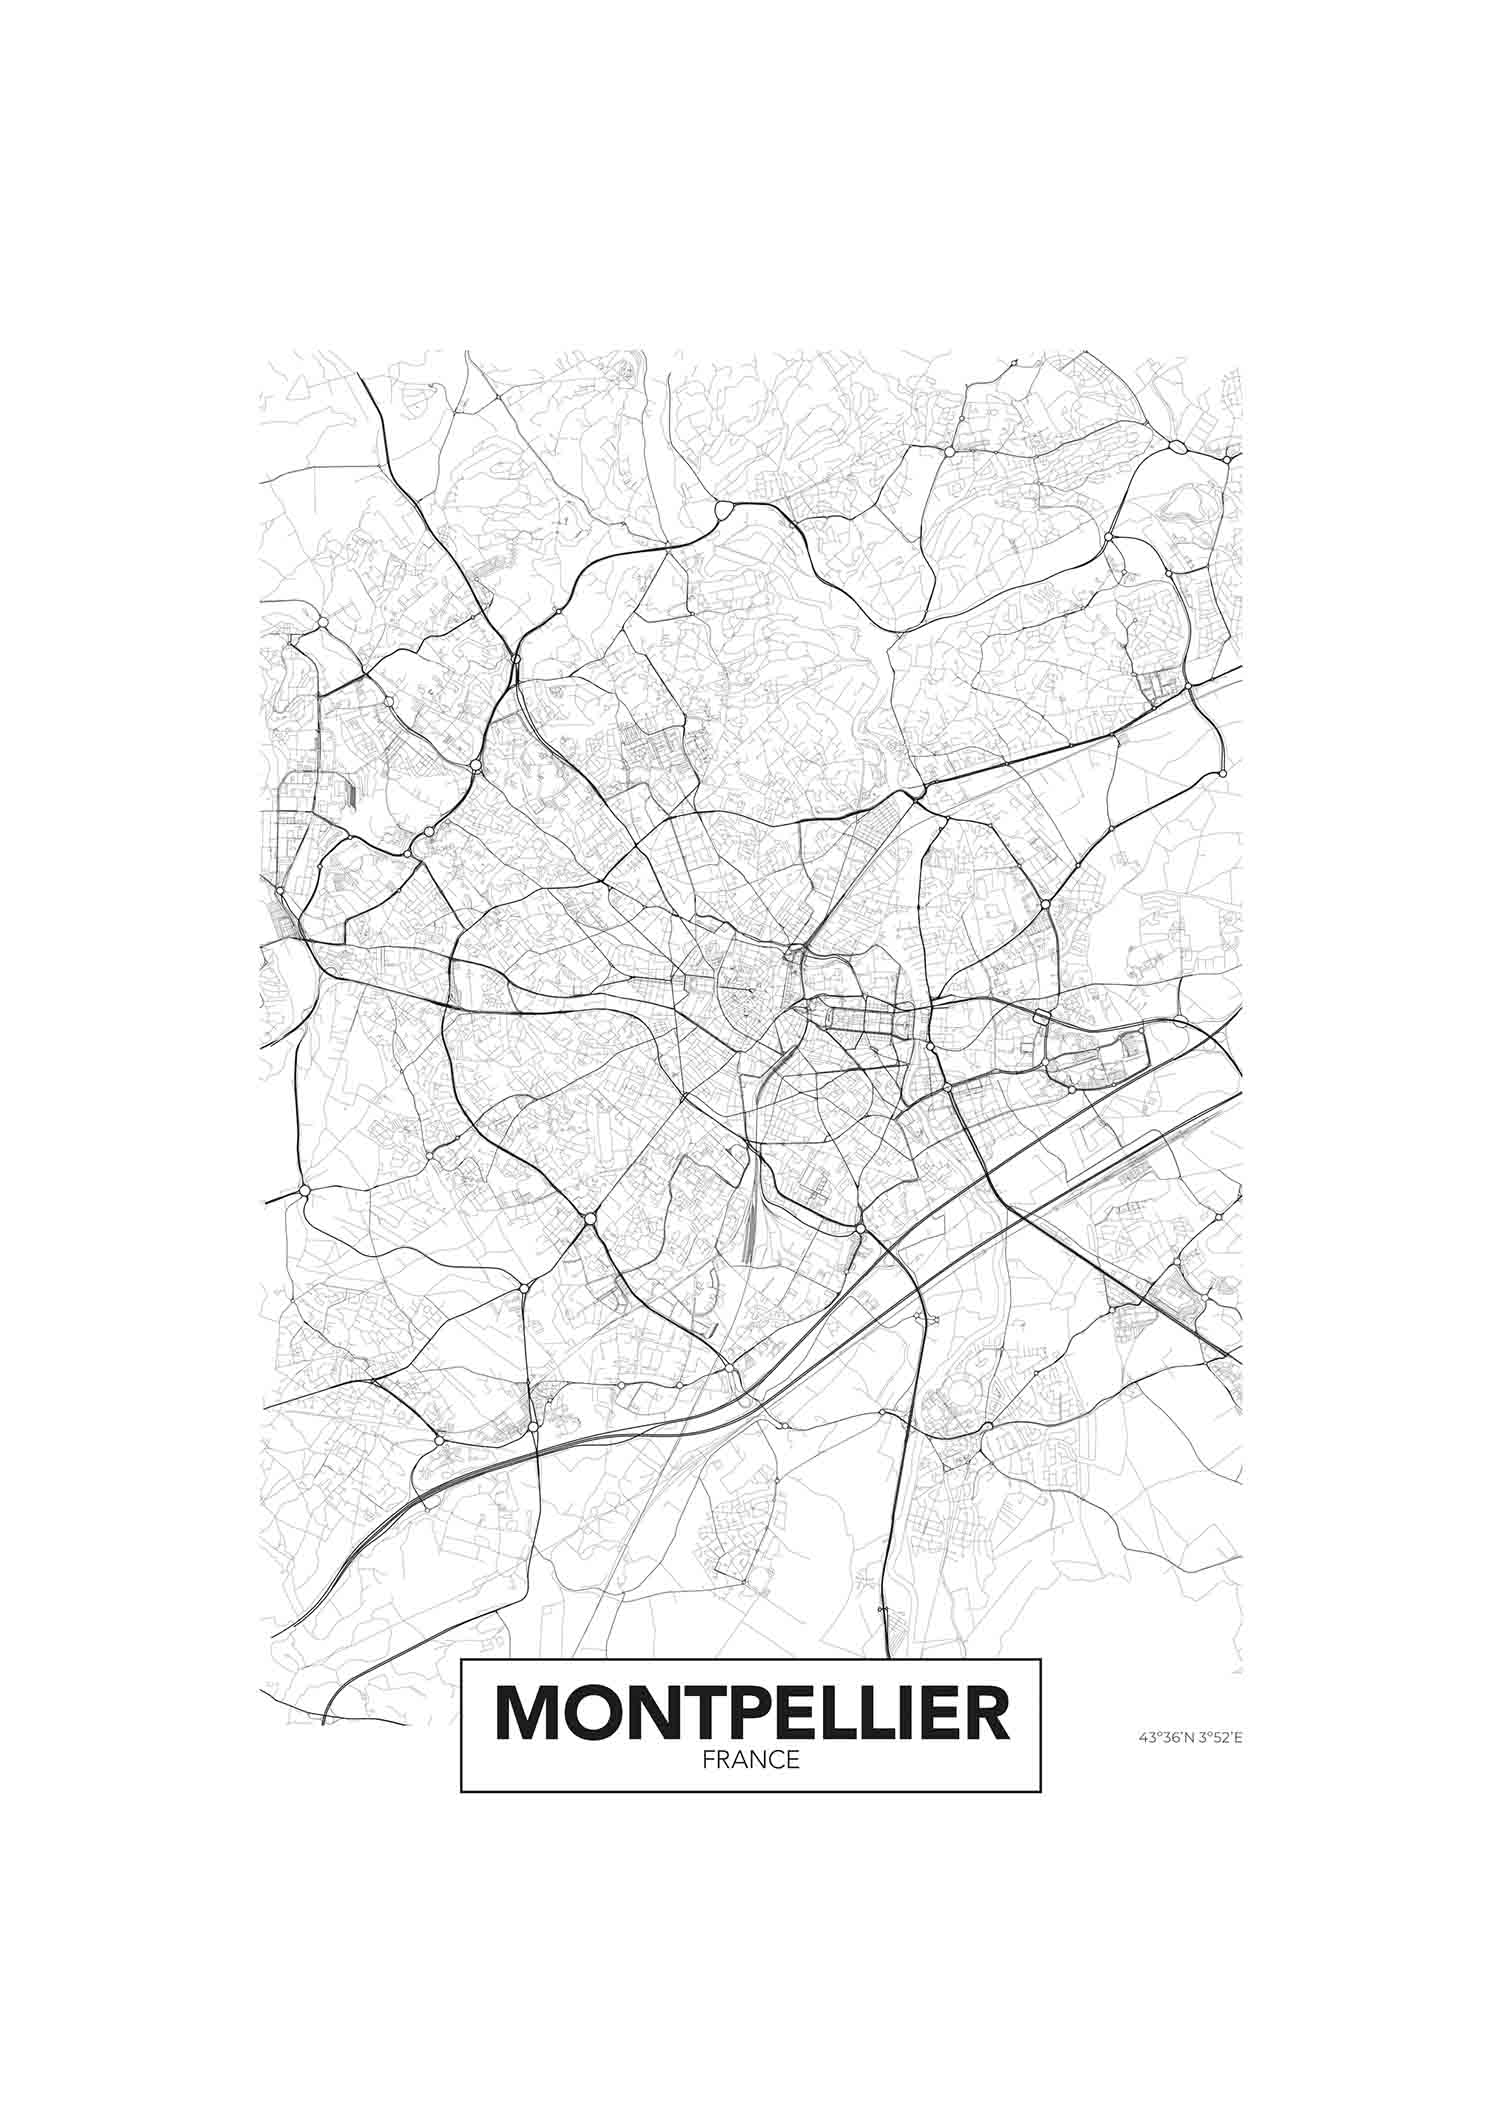 Póster de Montpellier | Laamina.com